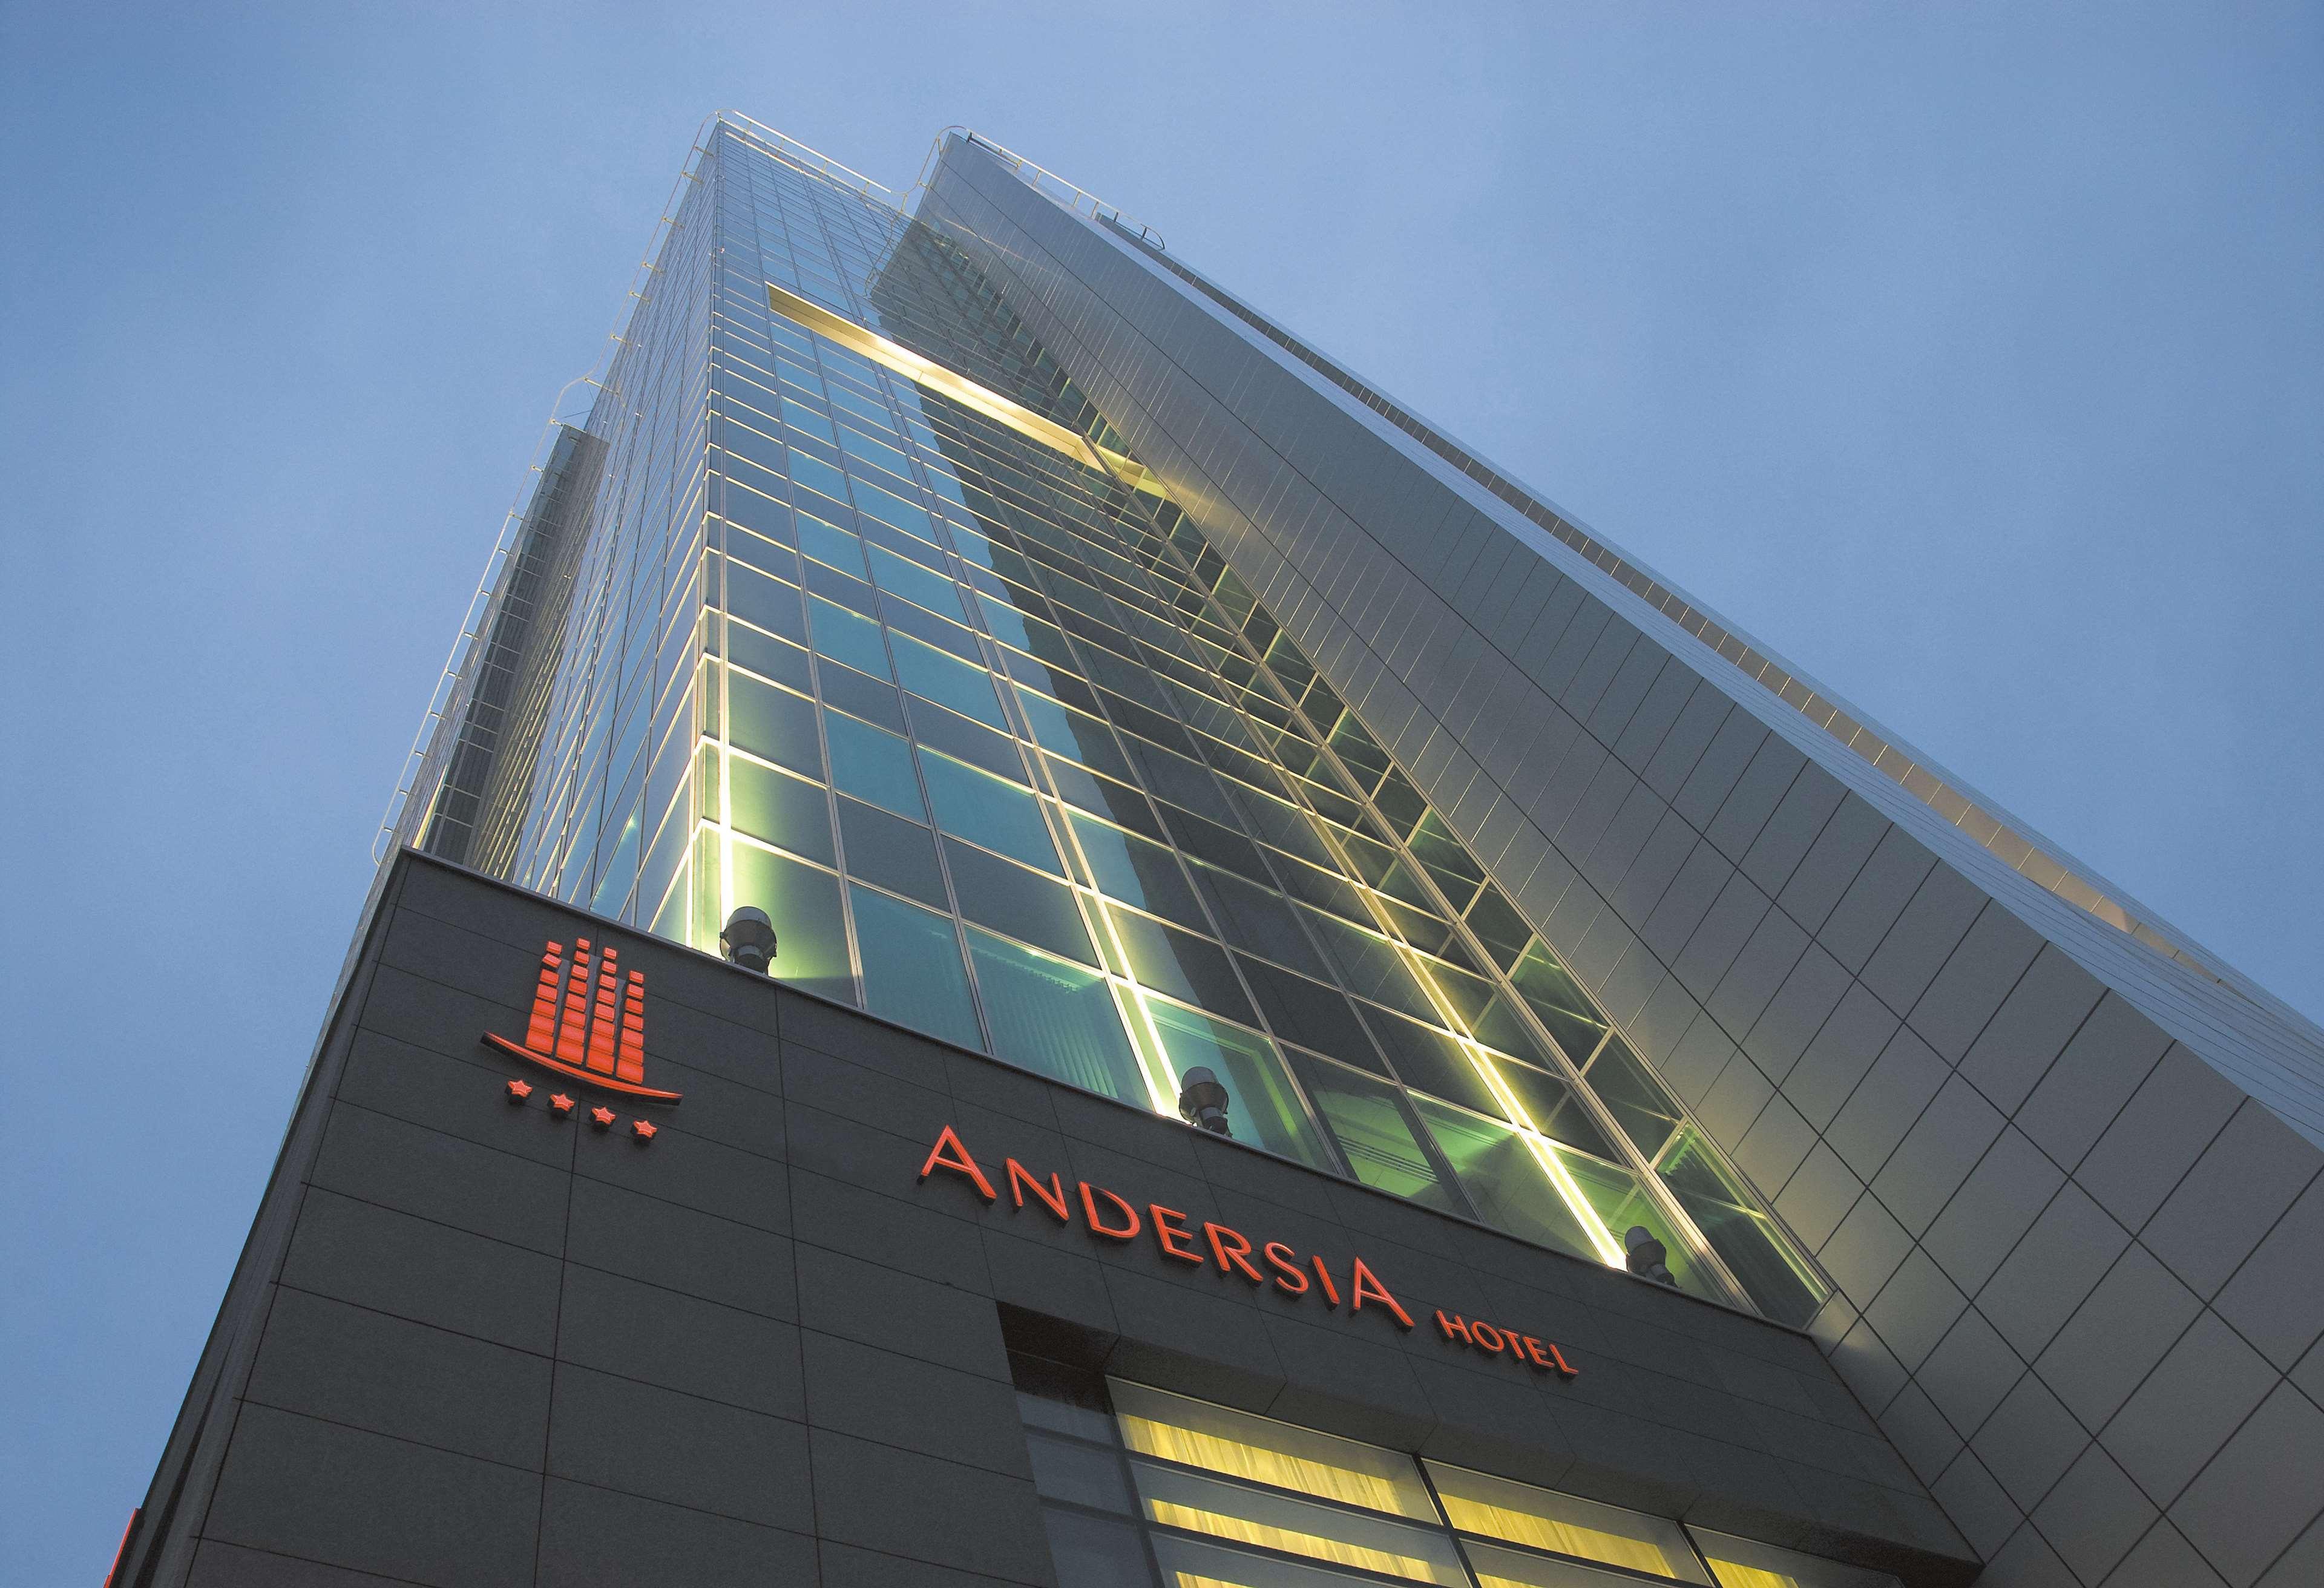 Andersia Hotel image